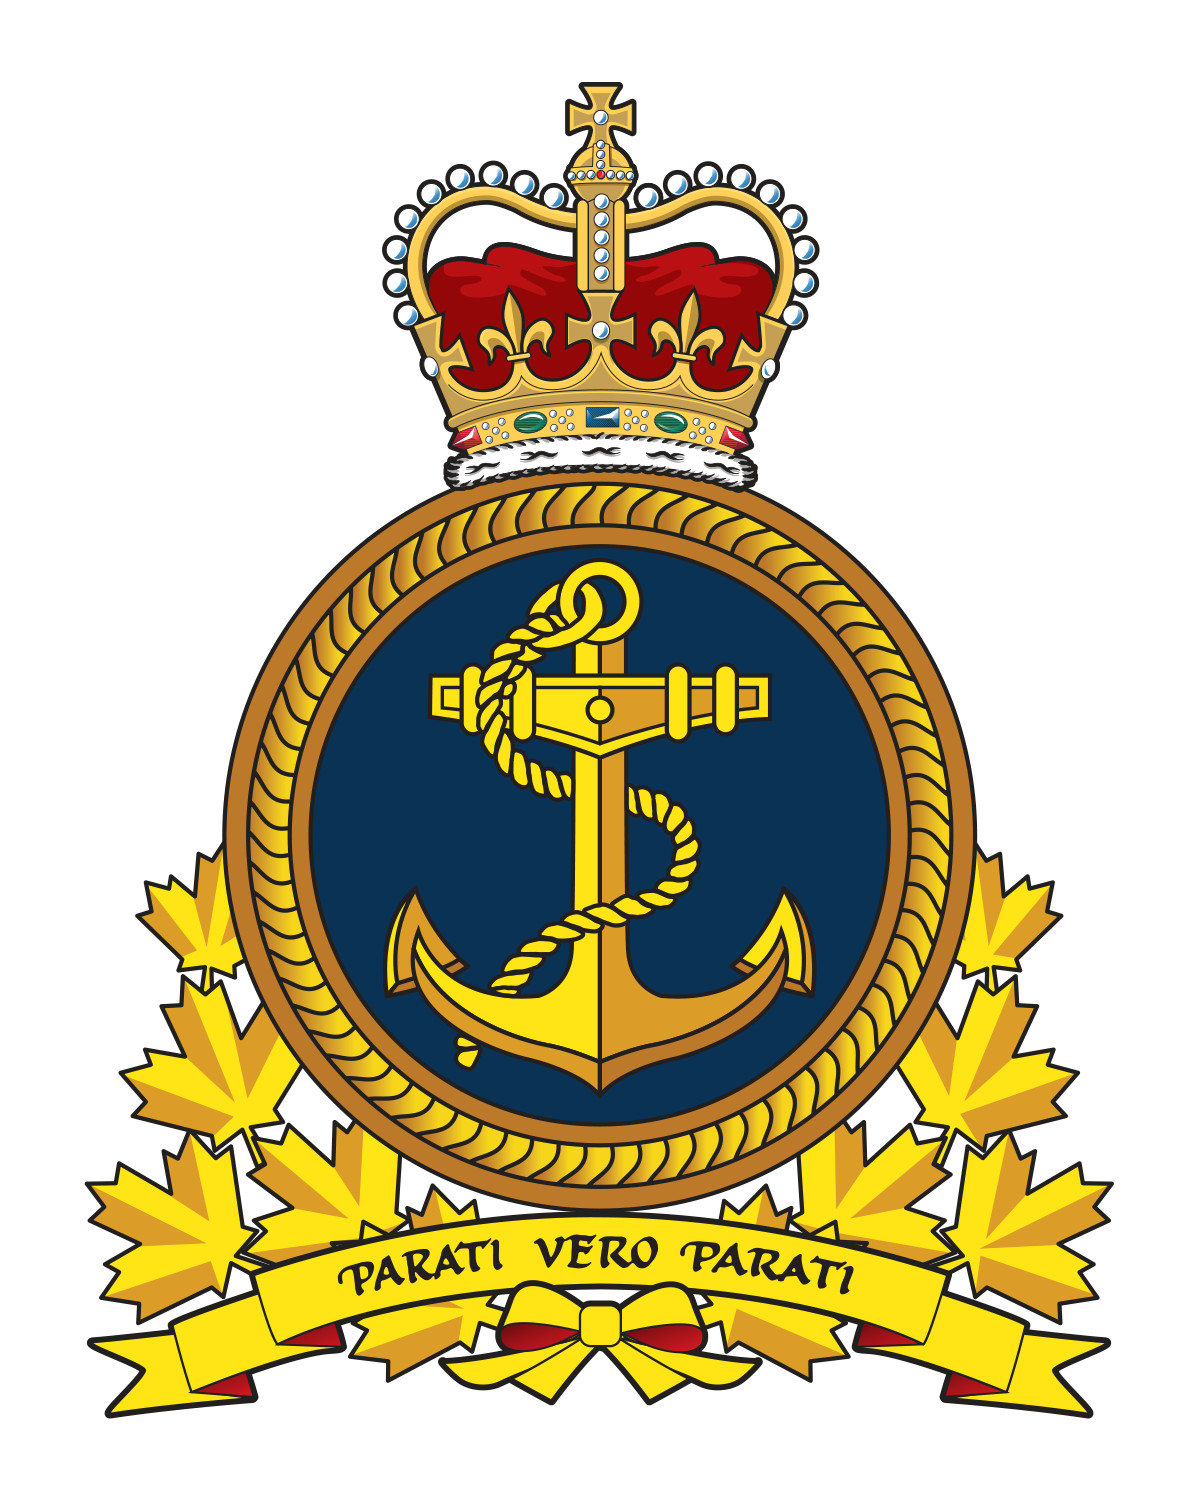 The Royal Canadian Navy Insignia